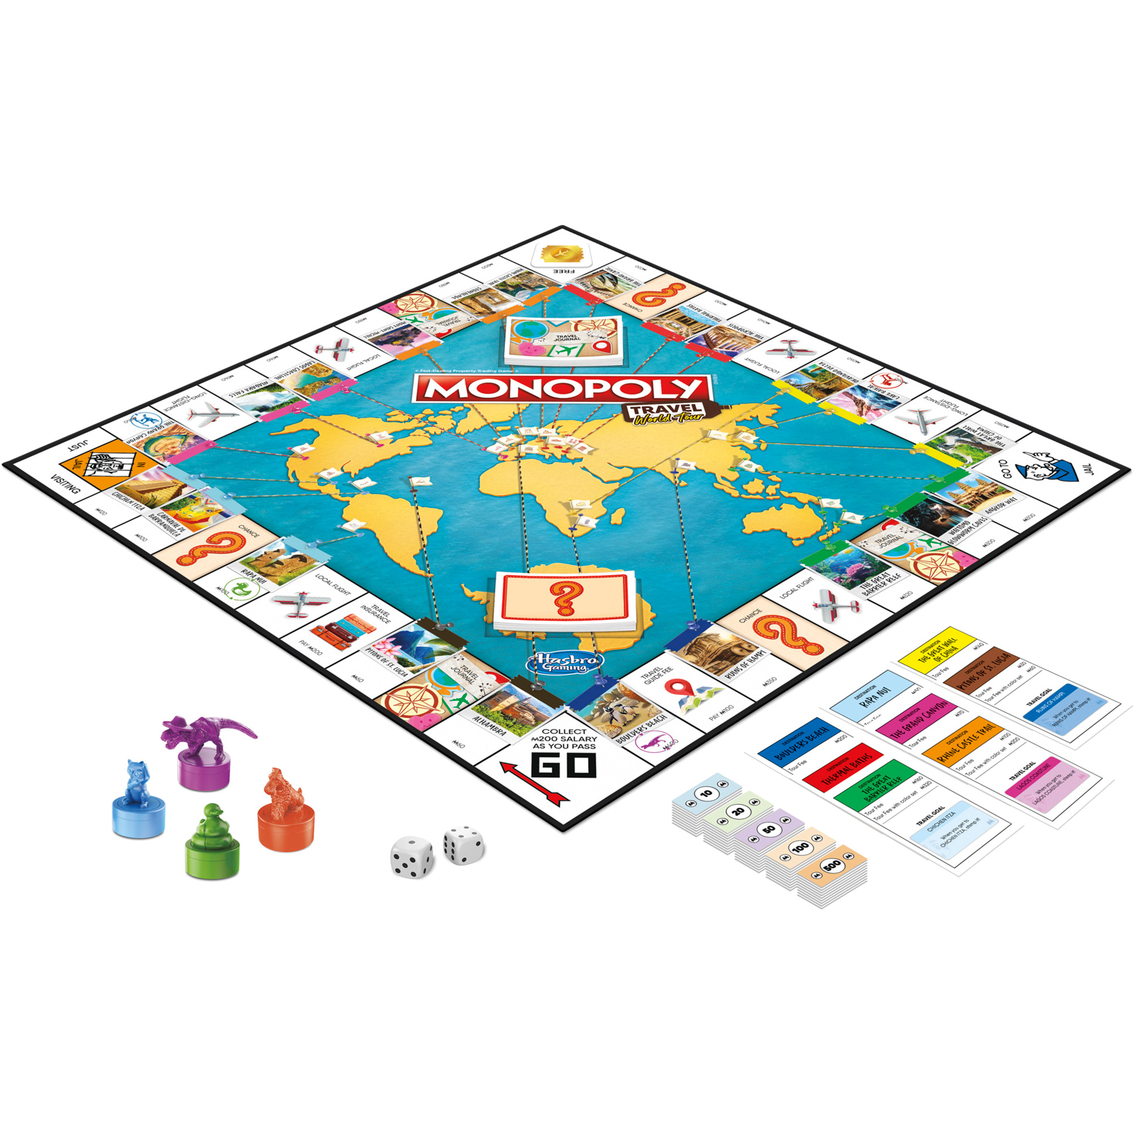 Hasbro Monopoly Travel World Tour Game - Image 2 of 5